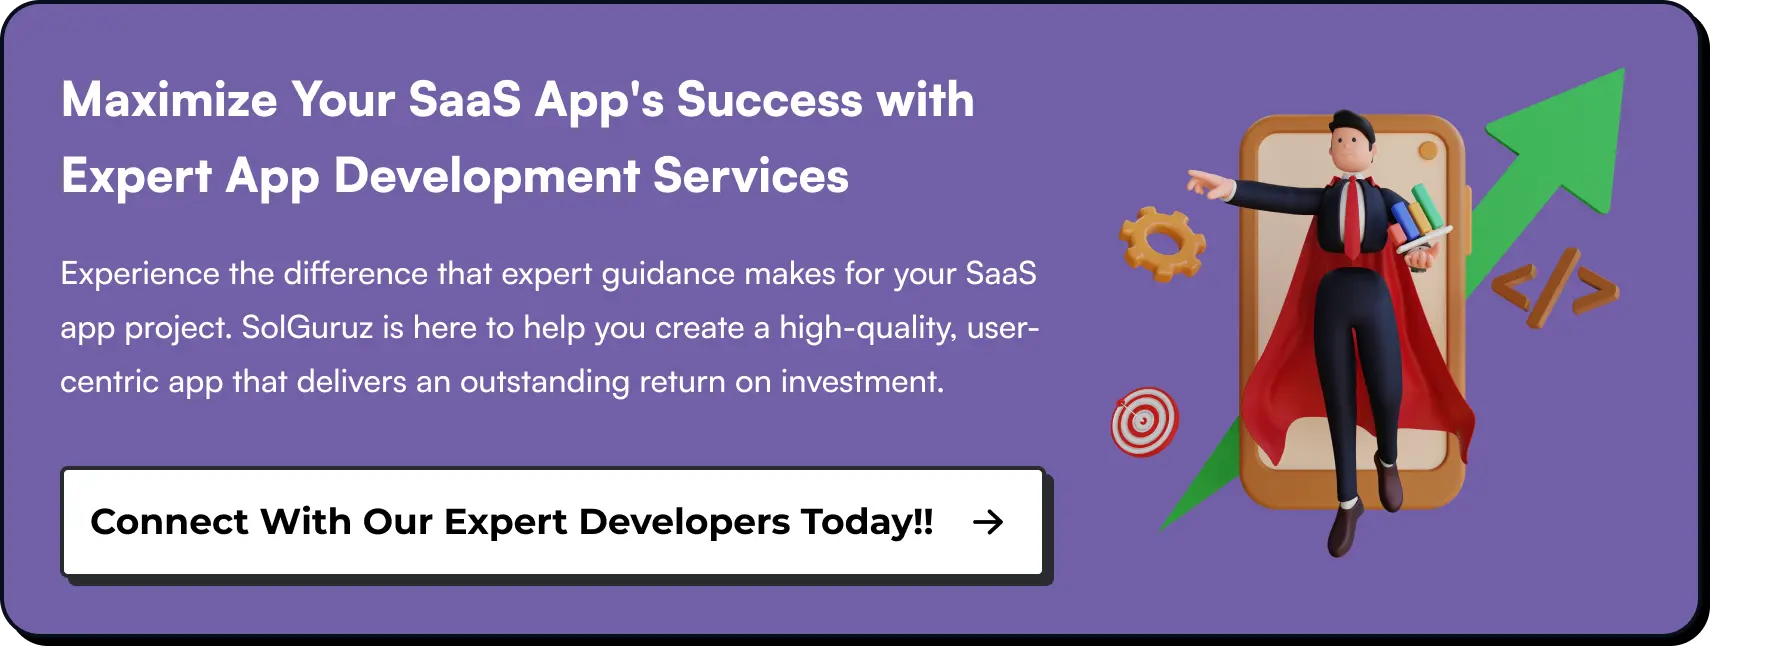 Maximize Your SaaS App's Success with Expert App Development Services